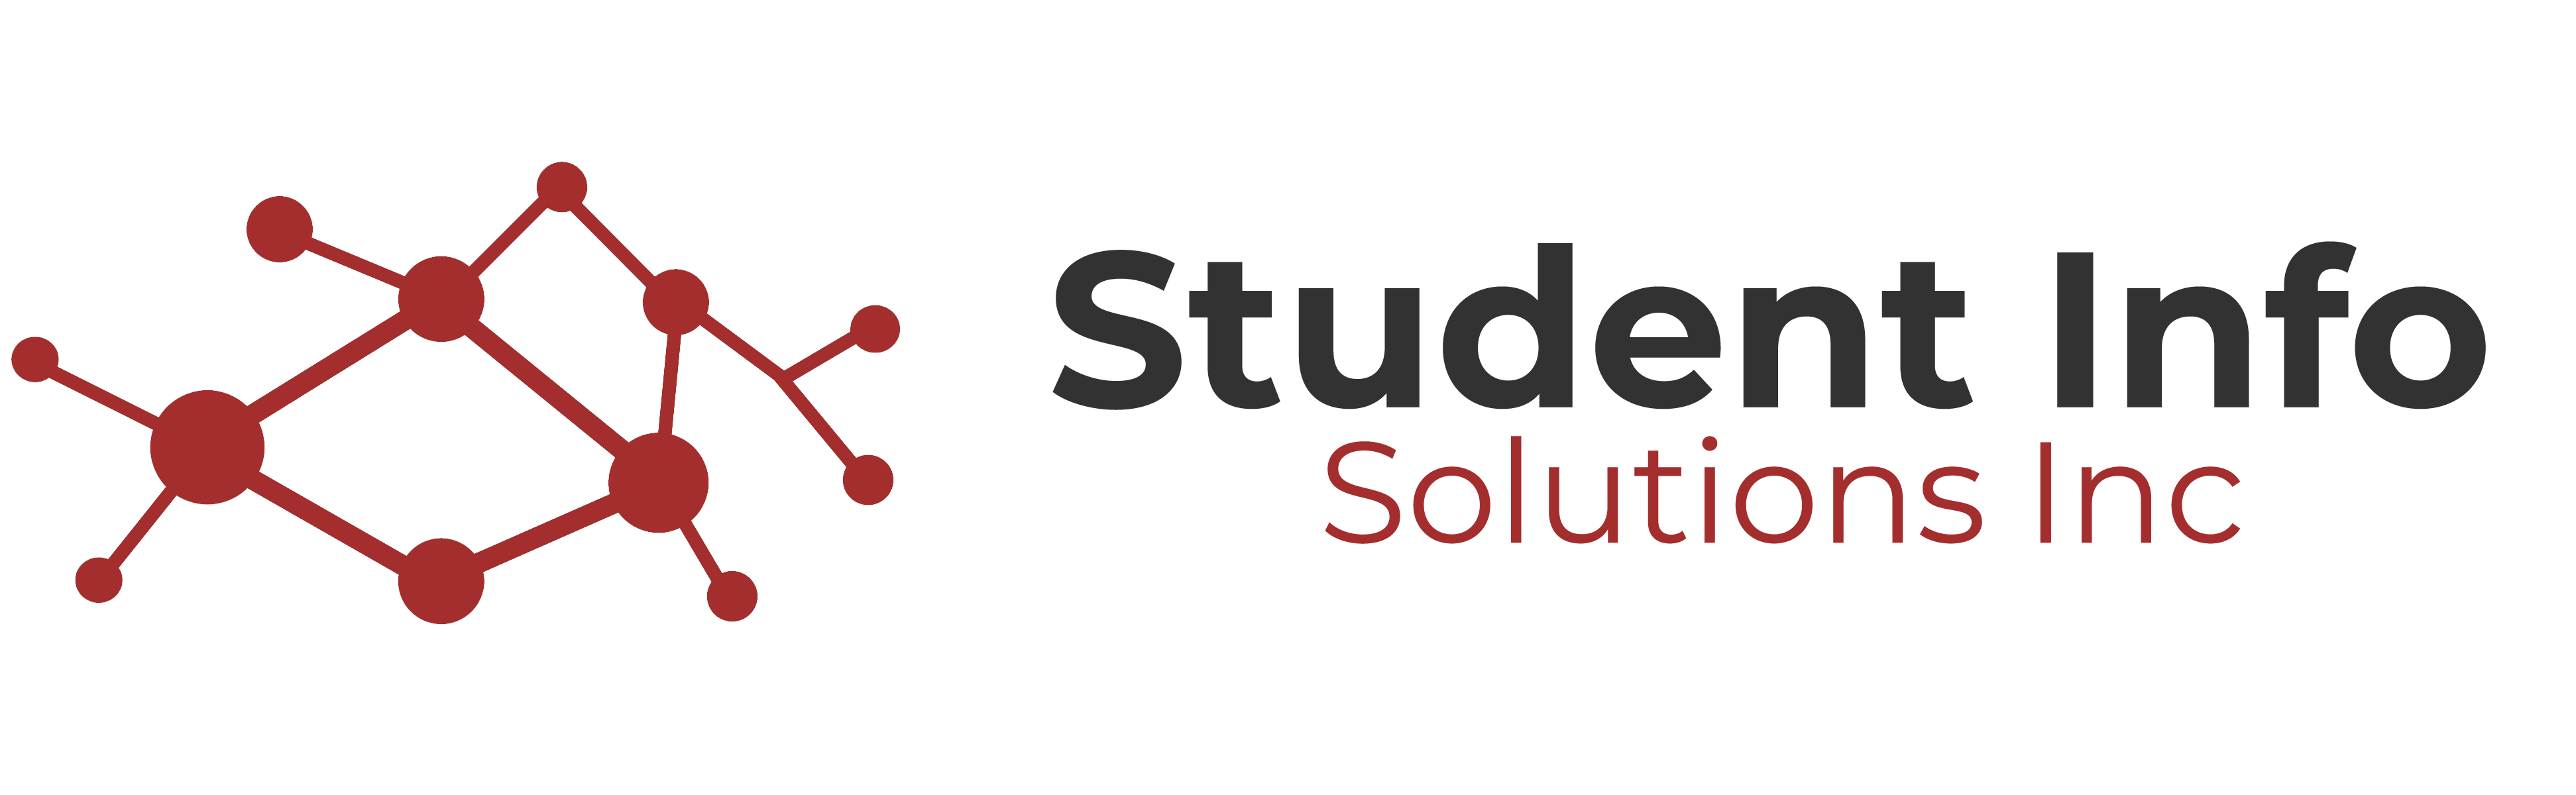 Student Info Solutions Inc. logo